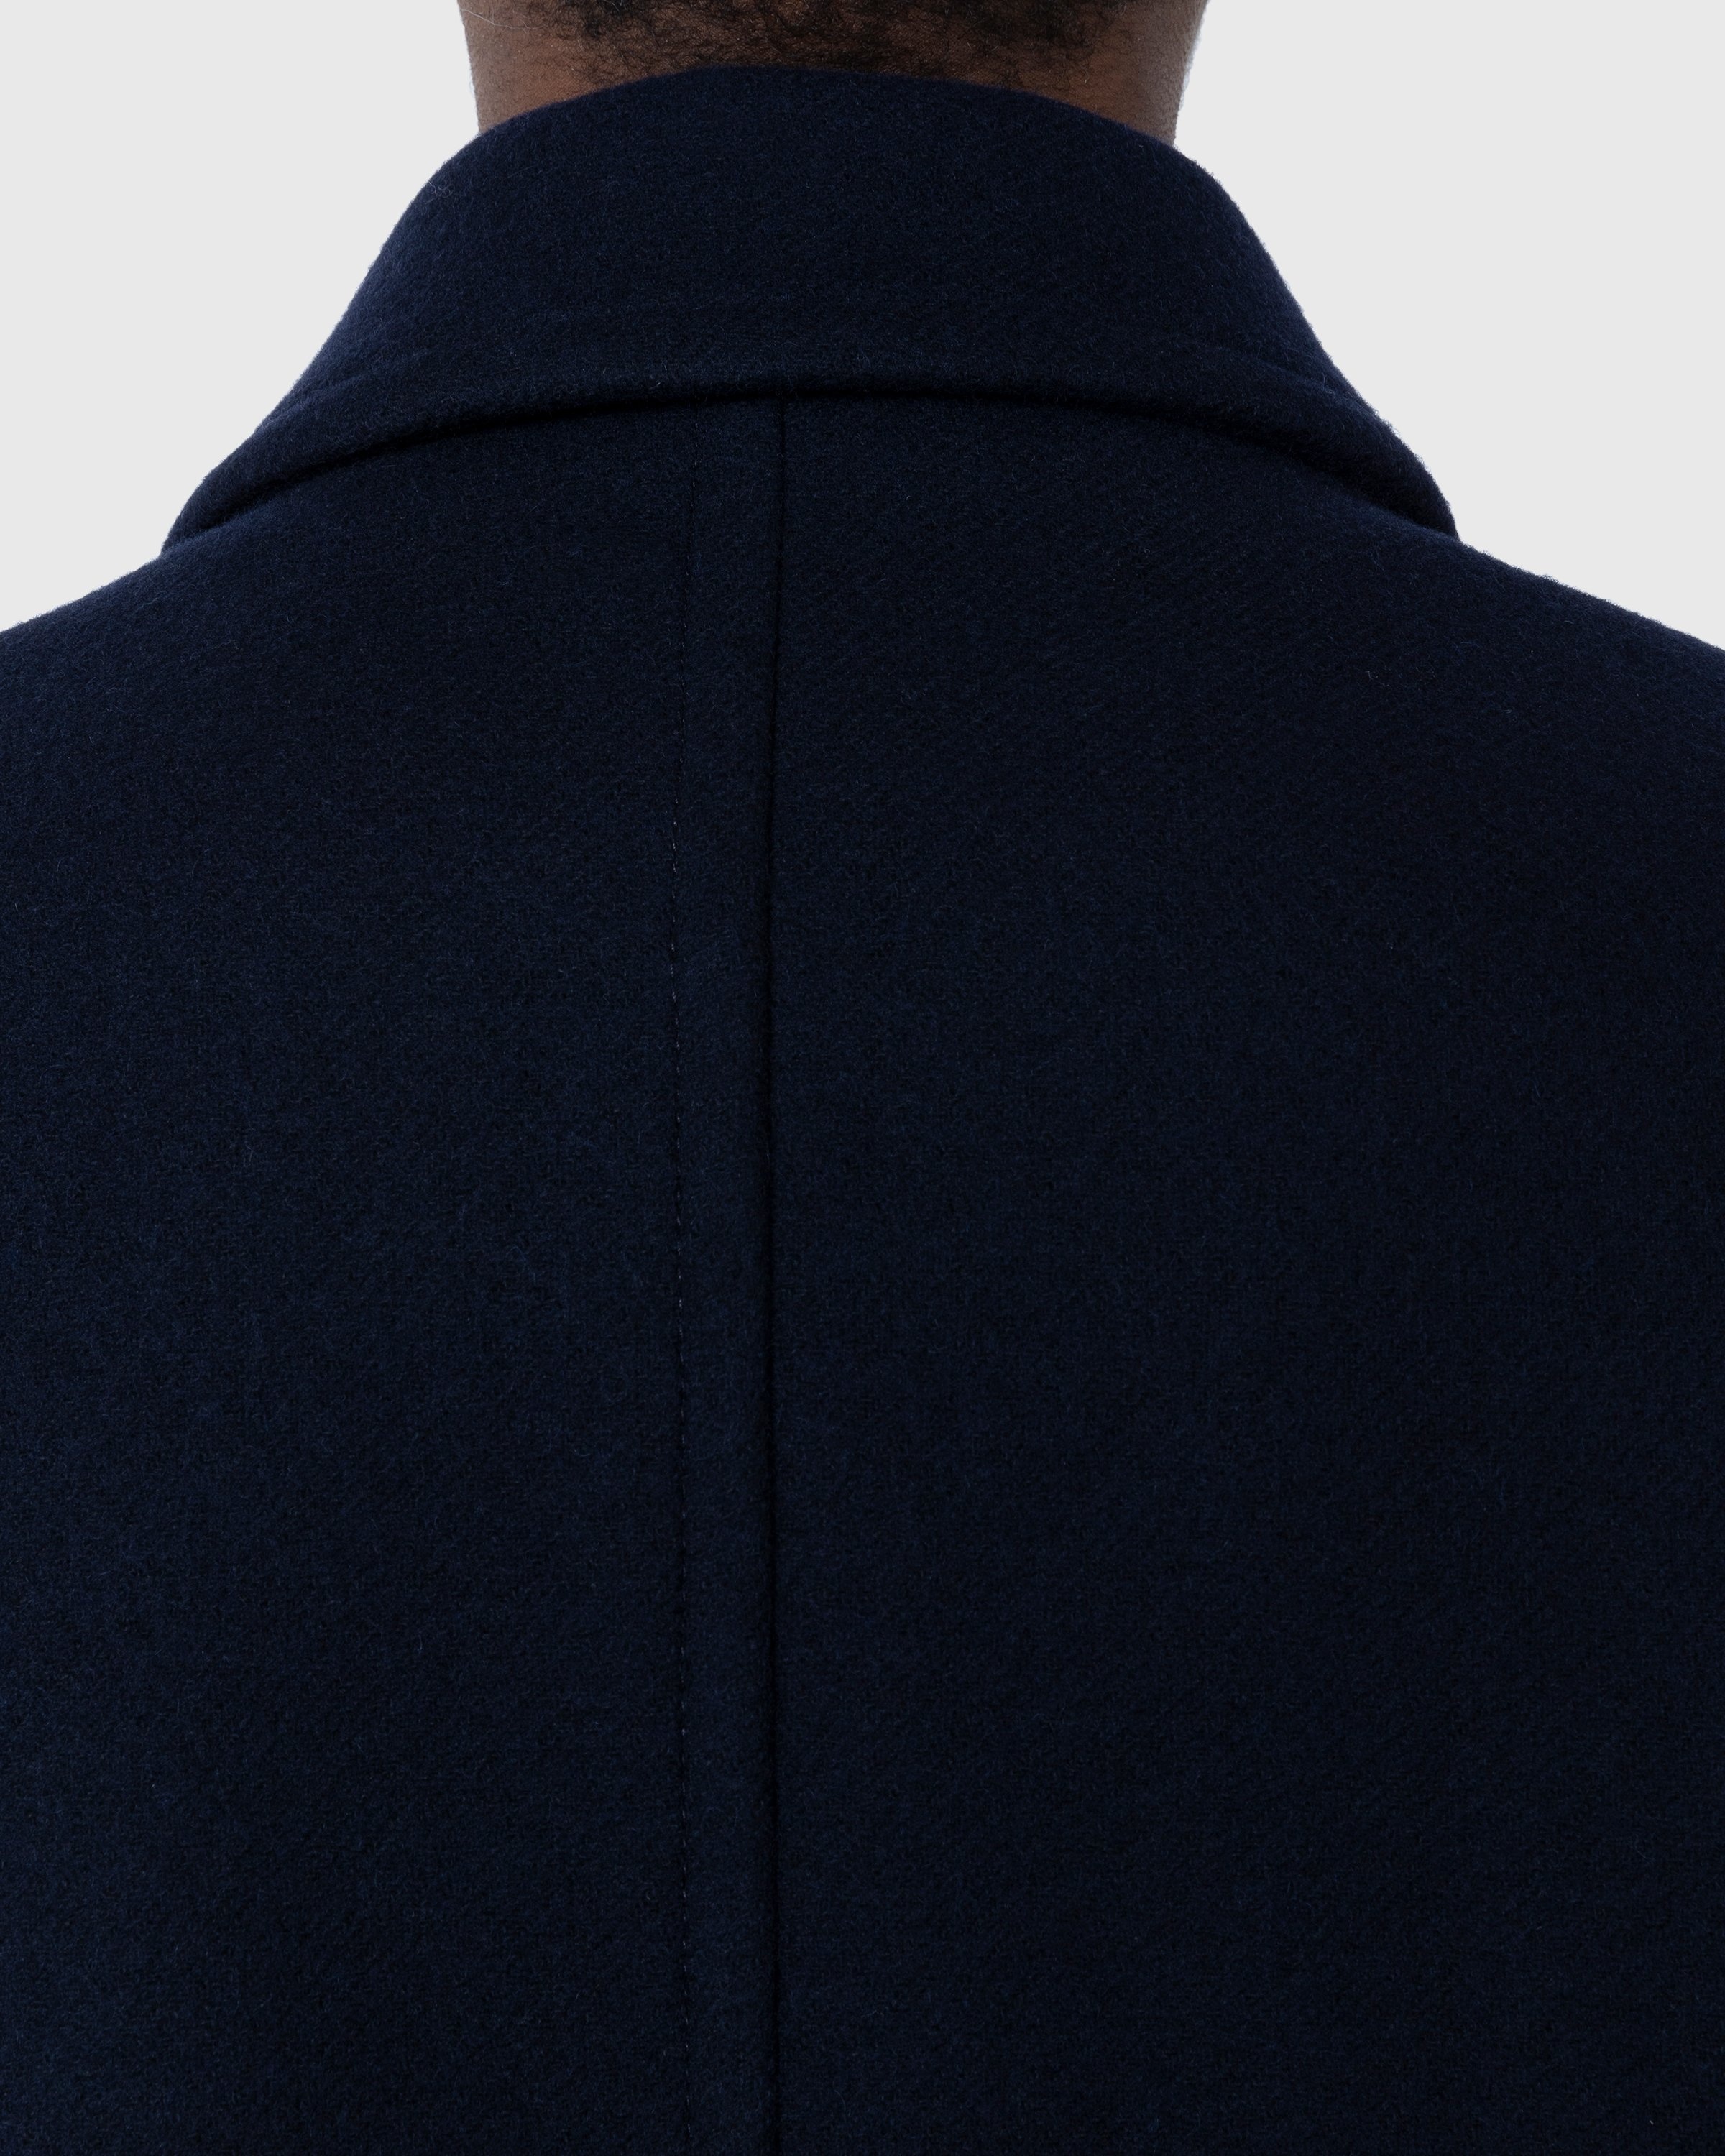 Dries van Noten – Ronnor Workwear Jacket Navy - Outerwear - Blue - Image 6